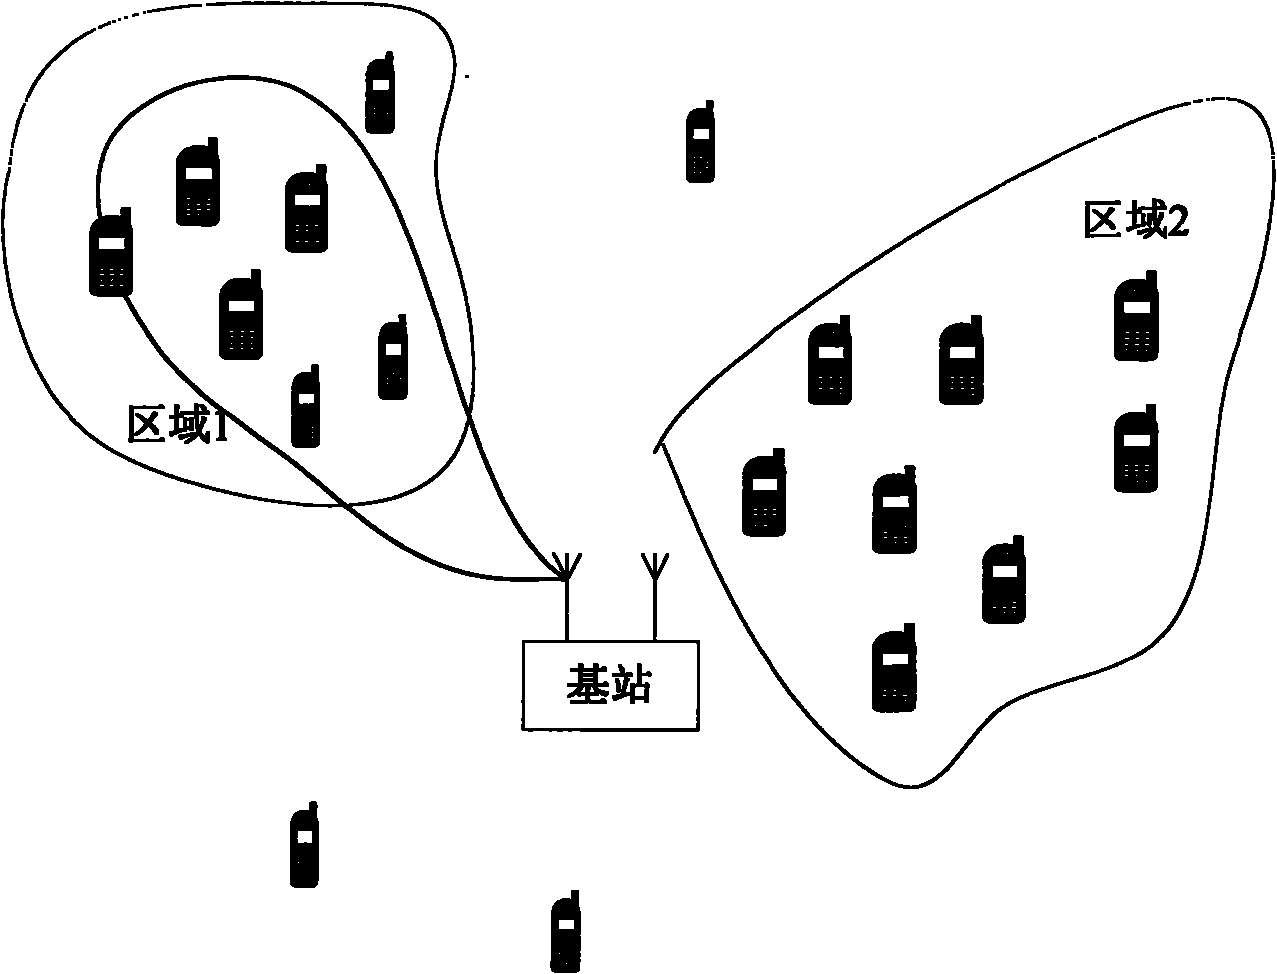 Multi-user random beam forming method and system